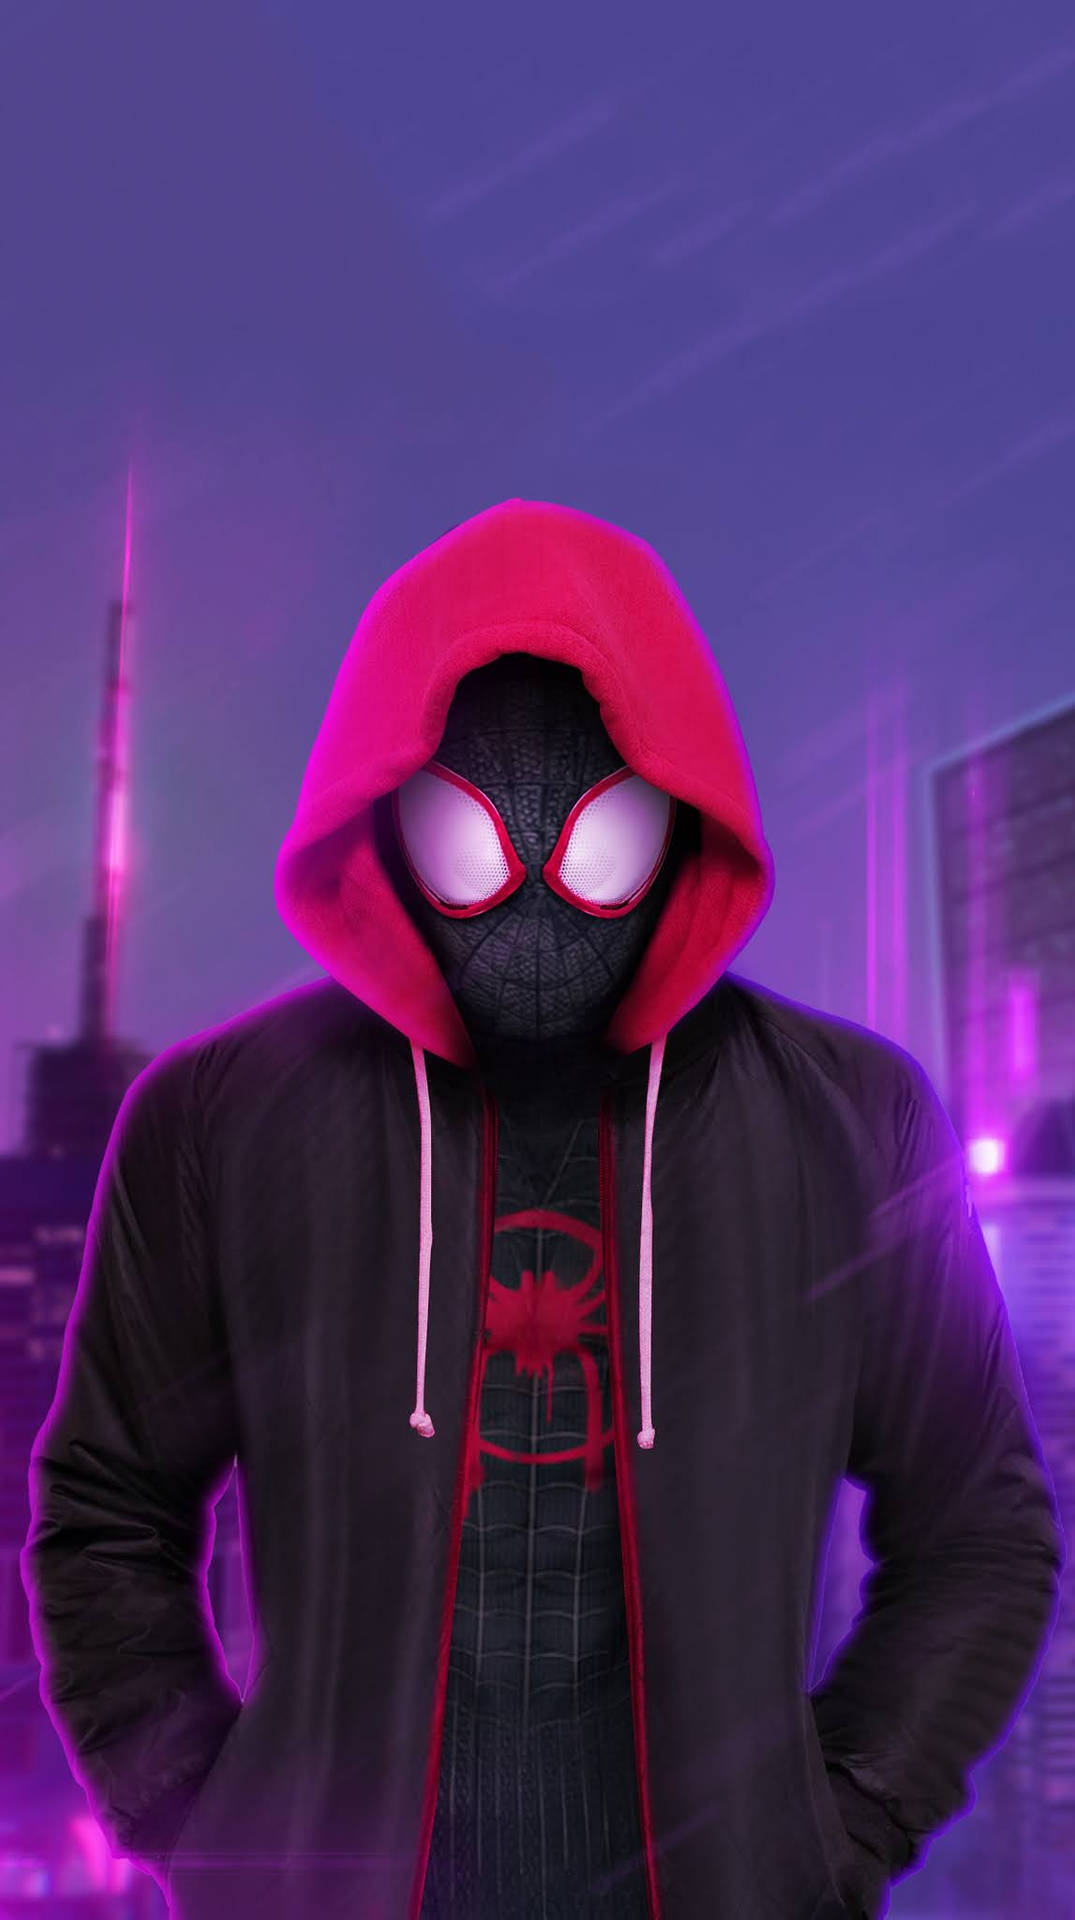 Spider Man Showcasing Power in Vibrant 4K Wallpaper